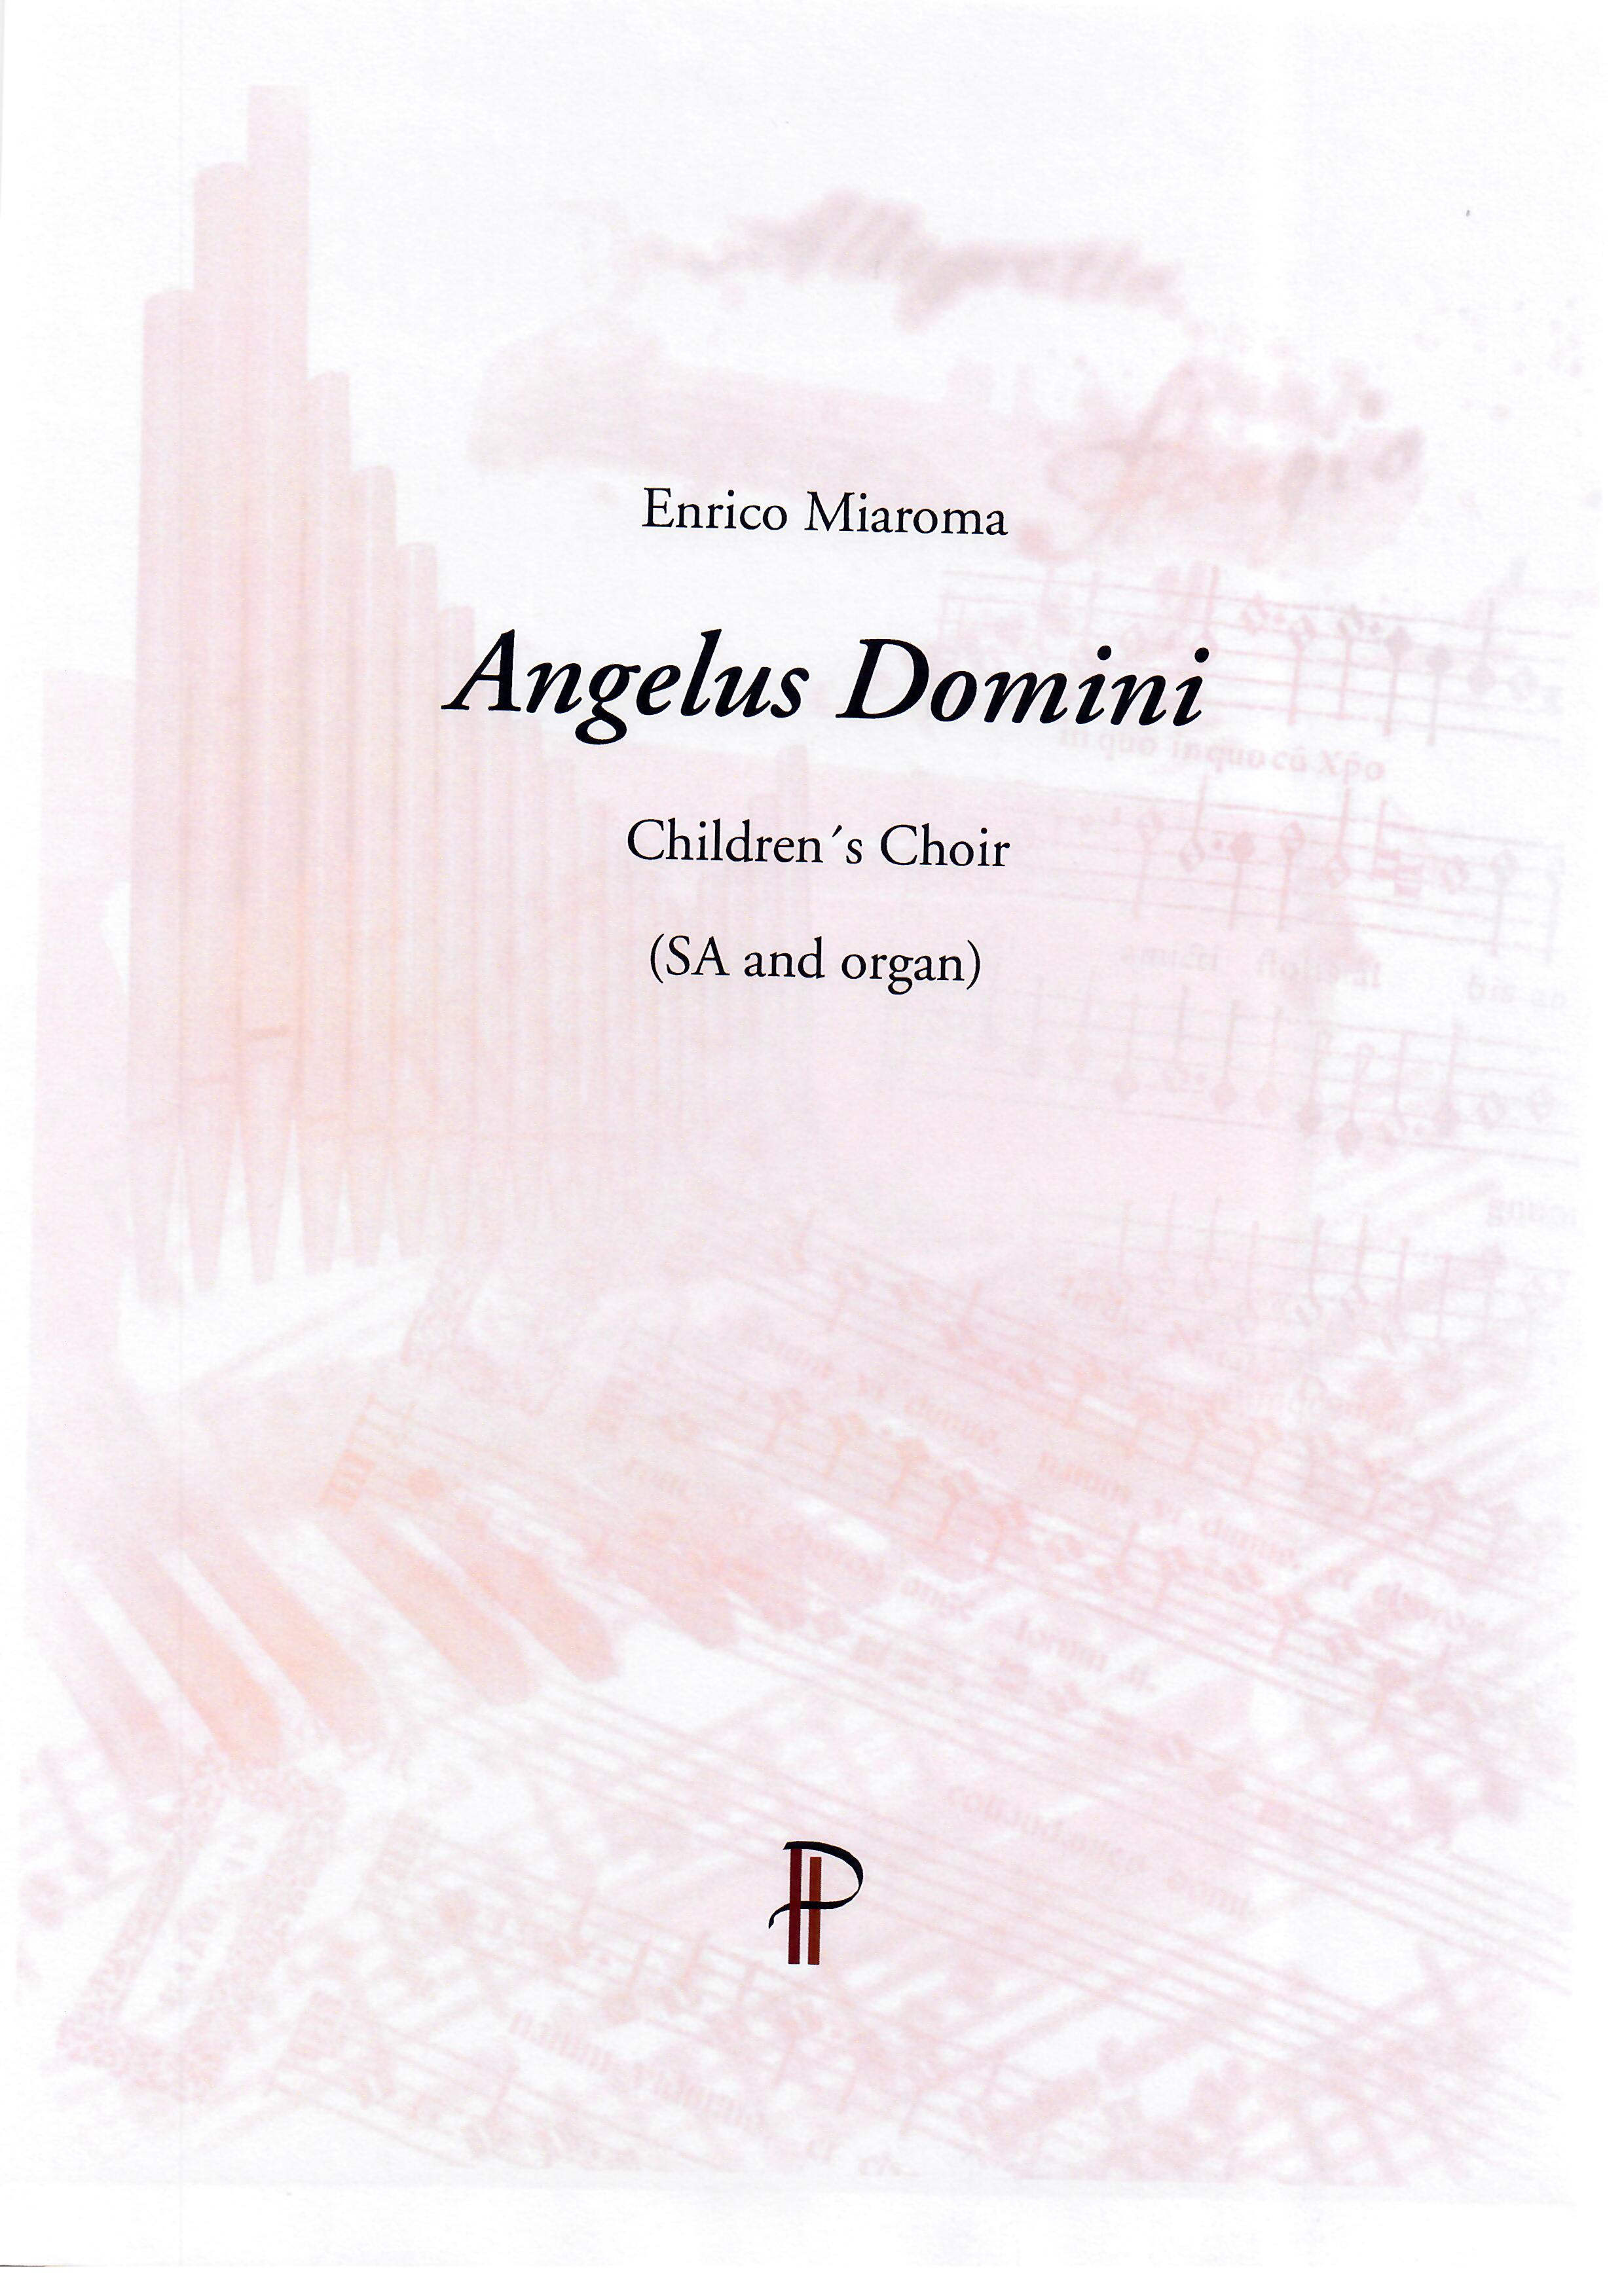 Angelus Domini - Show sample score